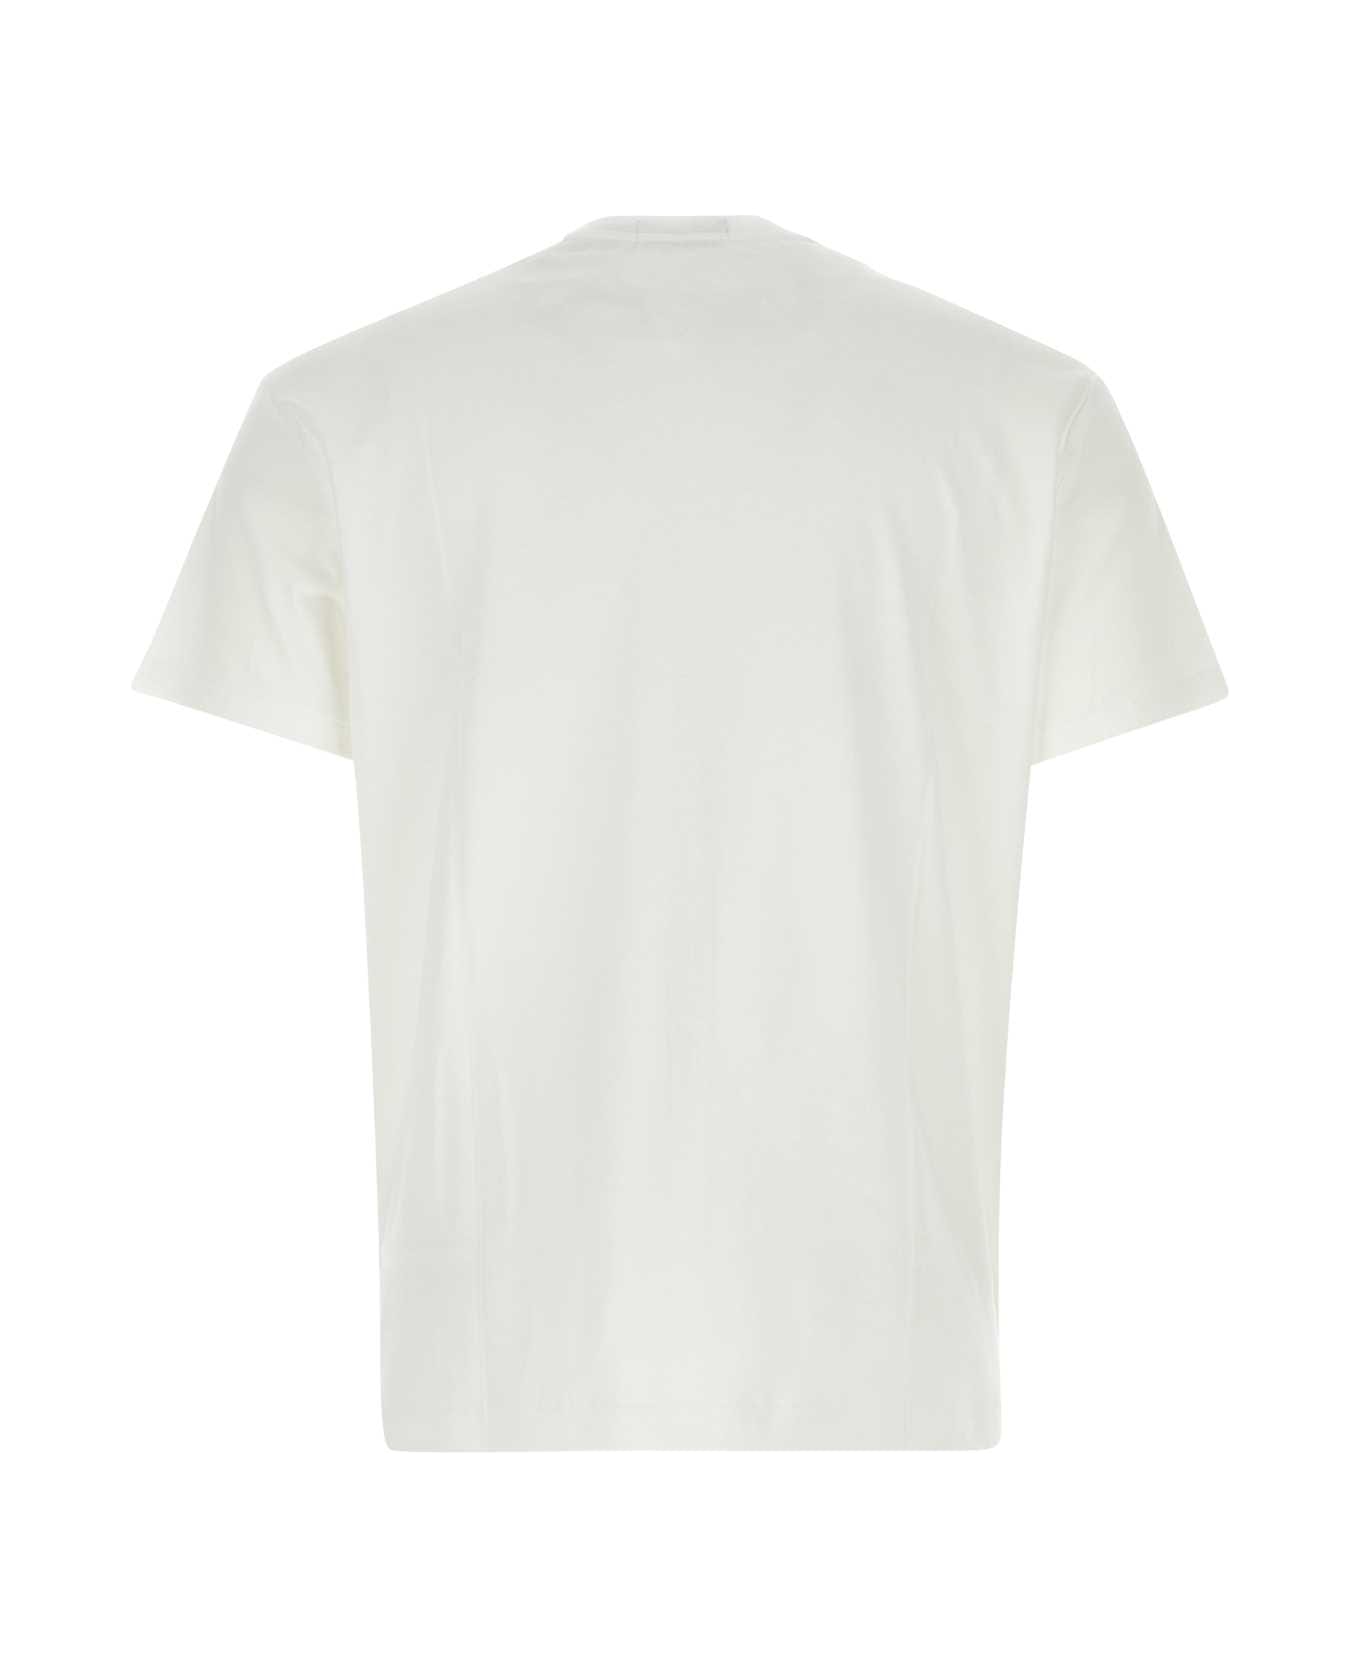 Polo Ralph Lauren White Cotton T-shirt - WHITE